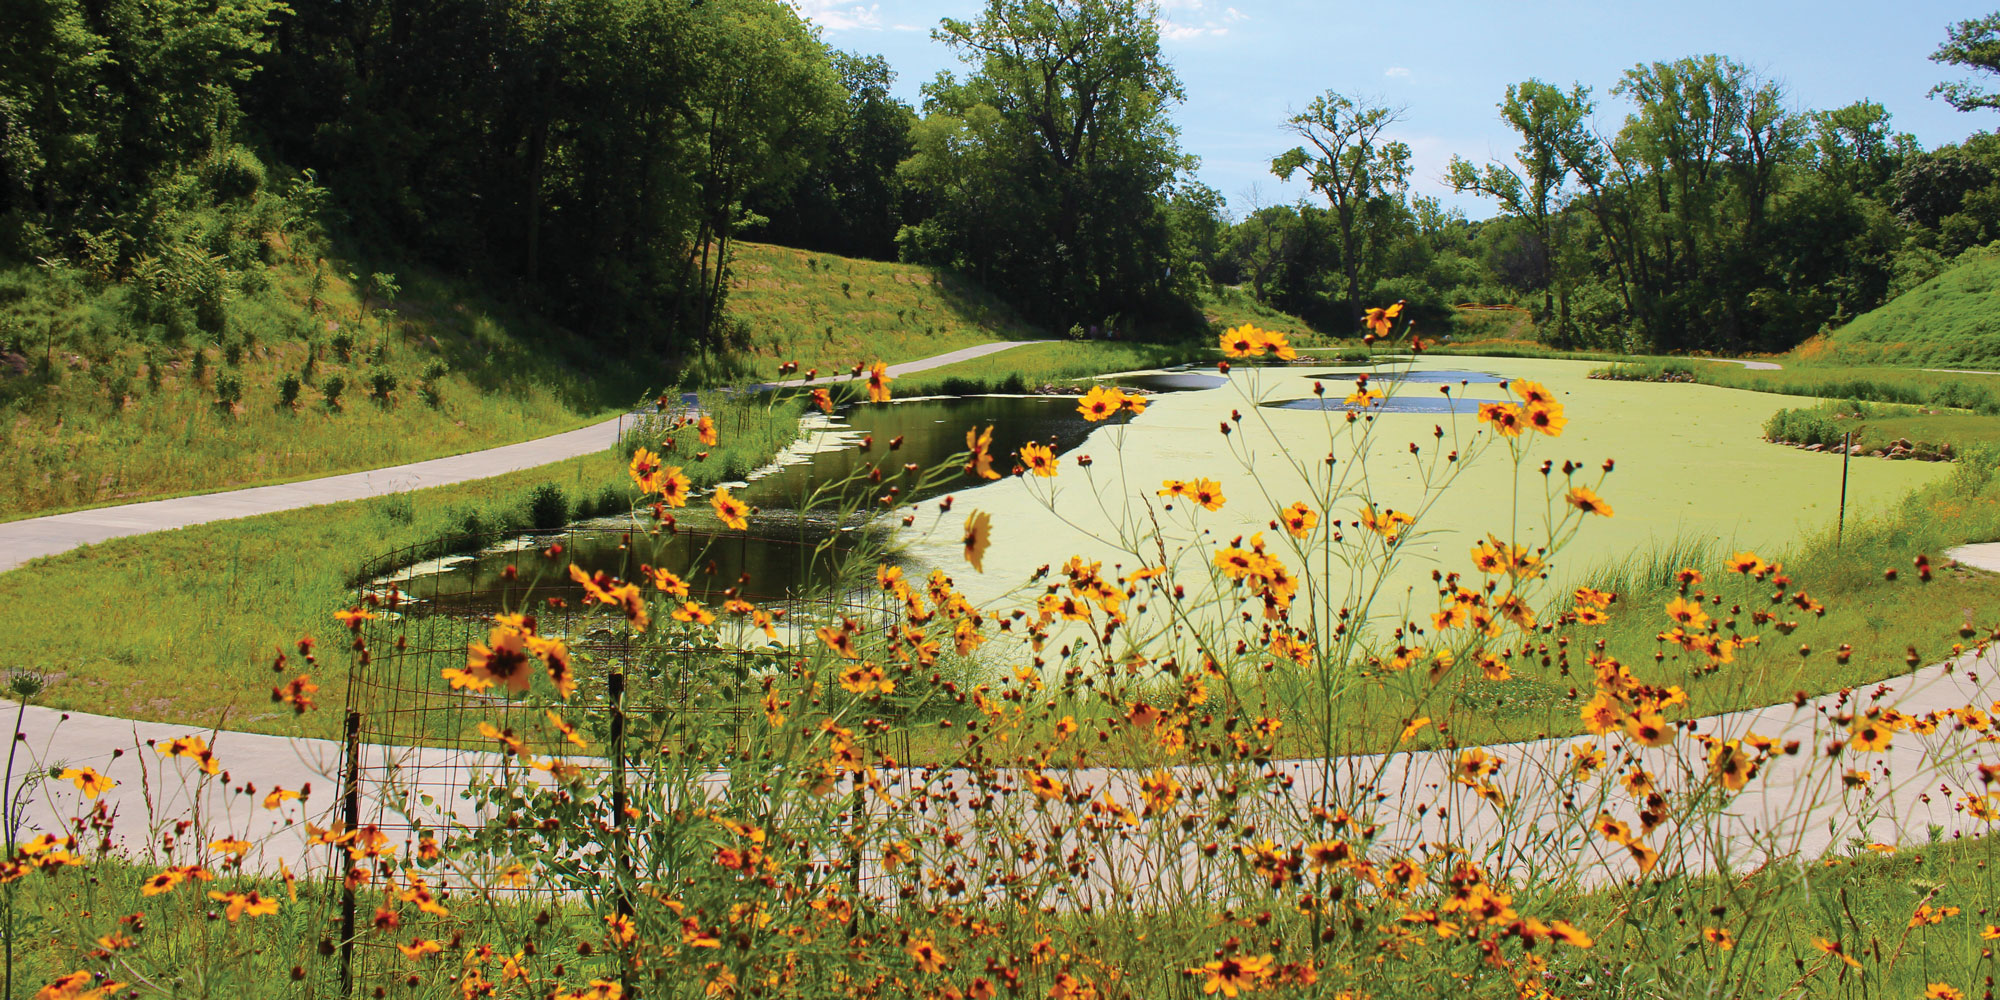 07-2017---Spring-Lake-Park-Pond-with-Sunflowers_WEB.jpg